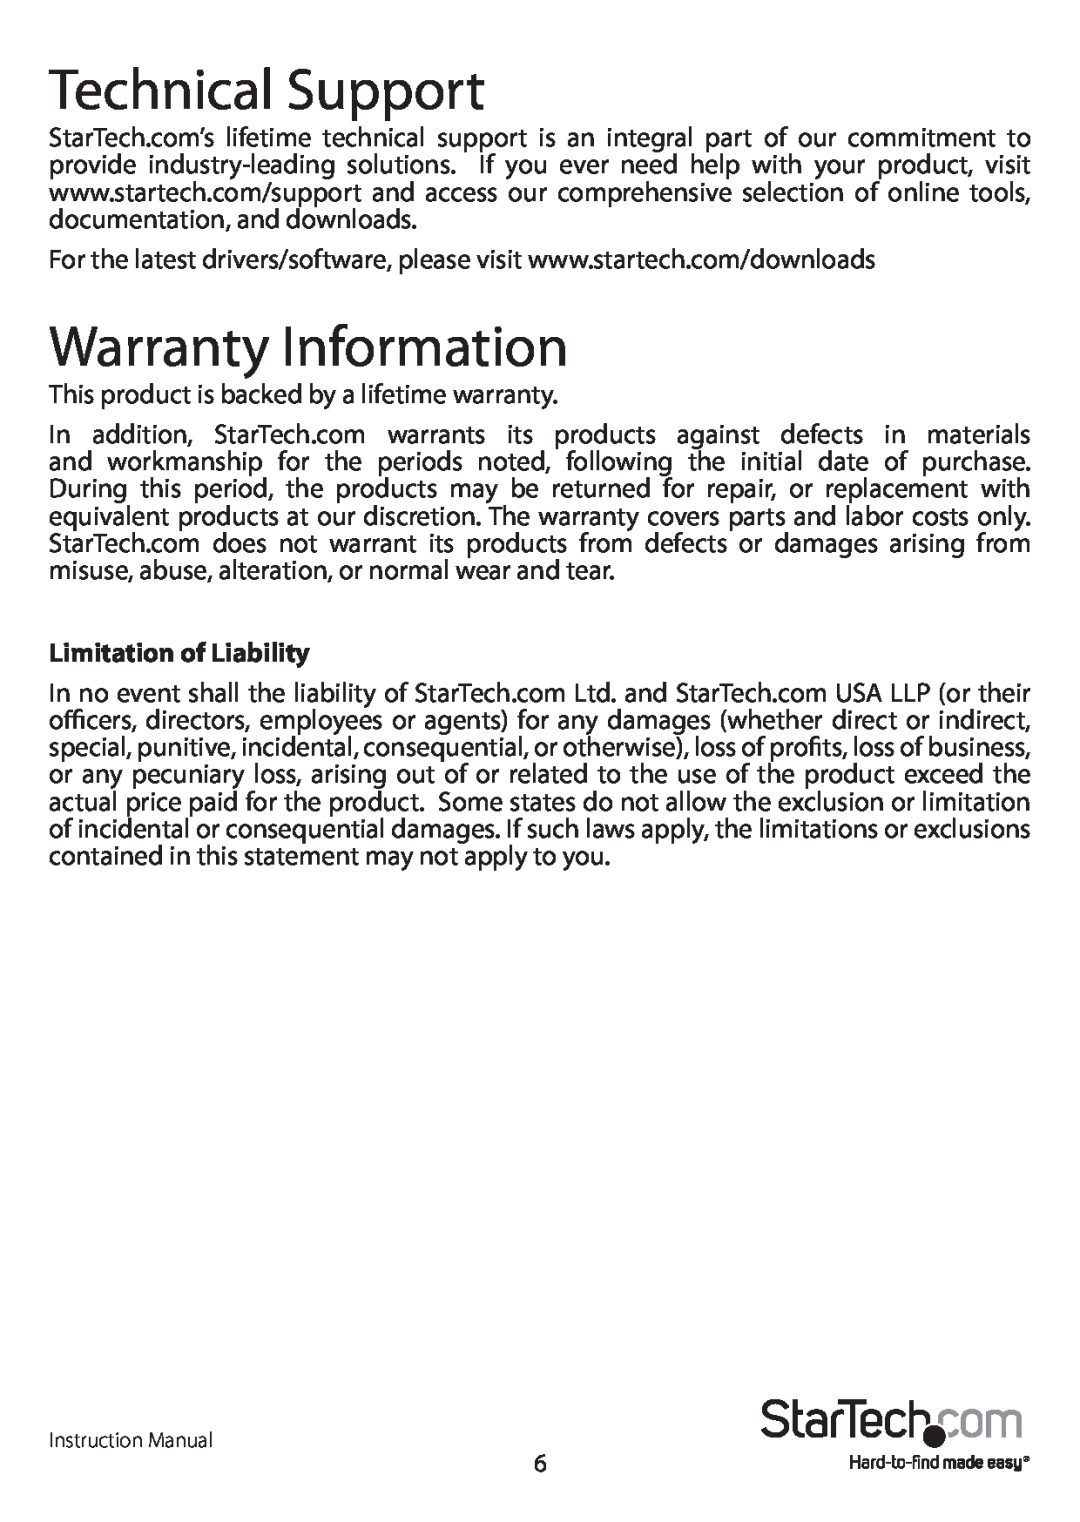 StarTech.com PCISAT2IDE1 manual Technical Support, Warranty Information, Limitation of Liability 